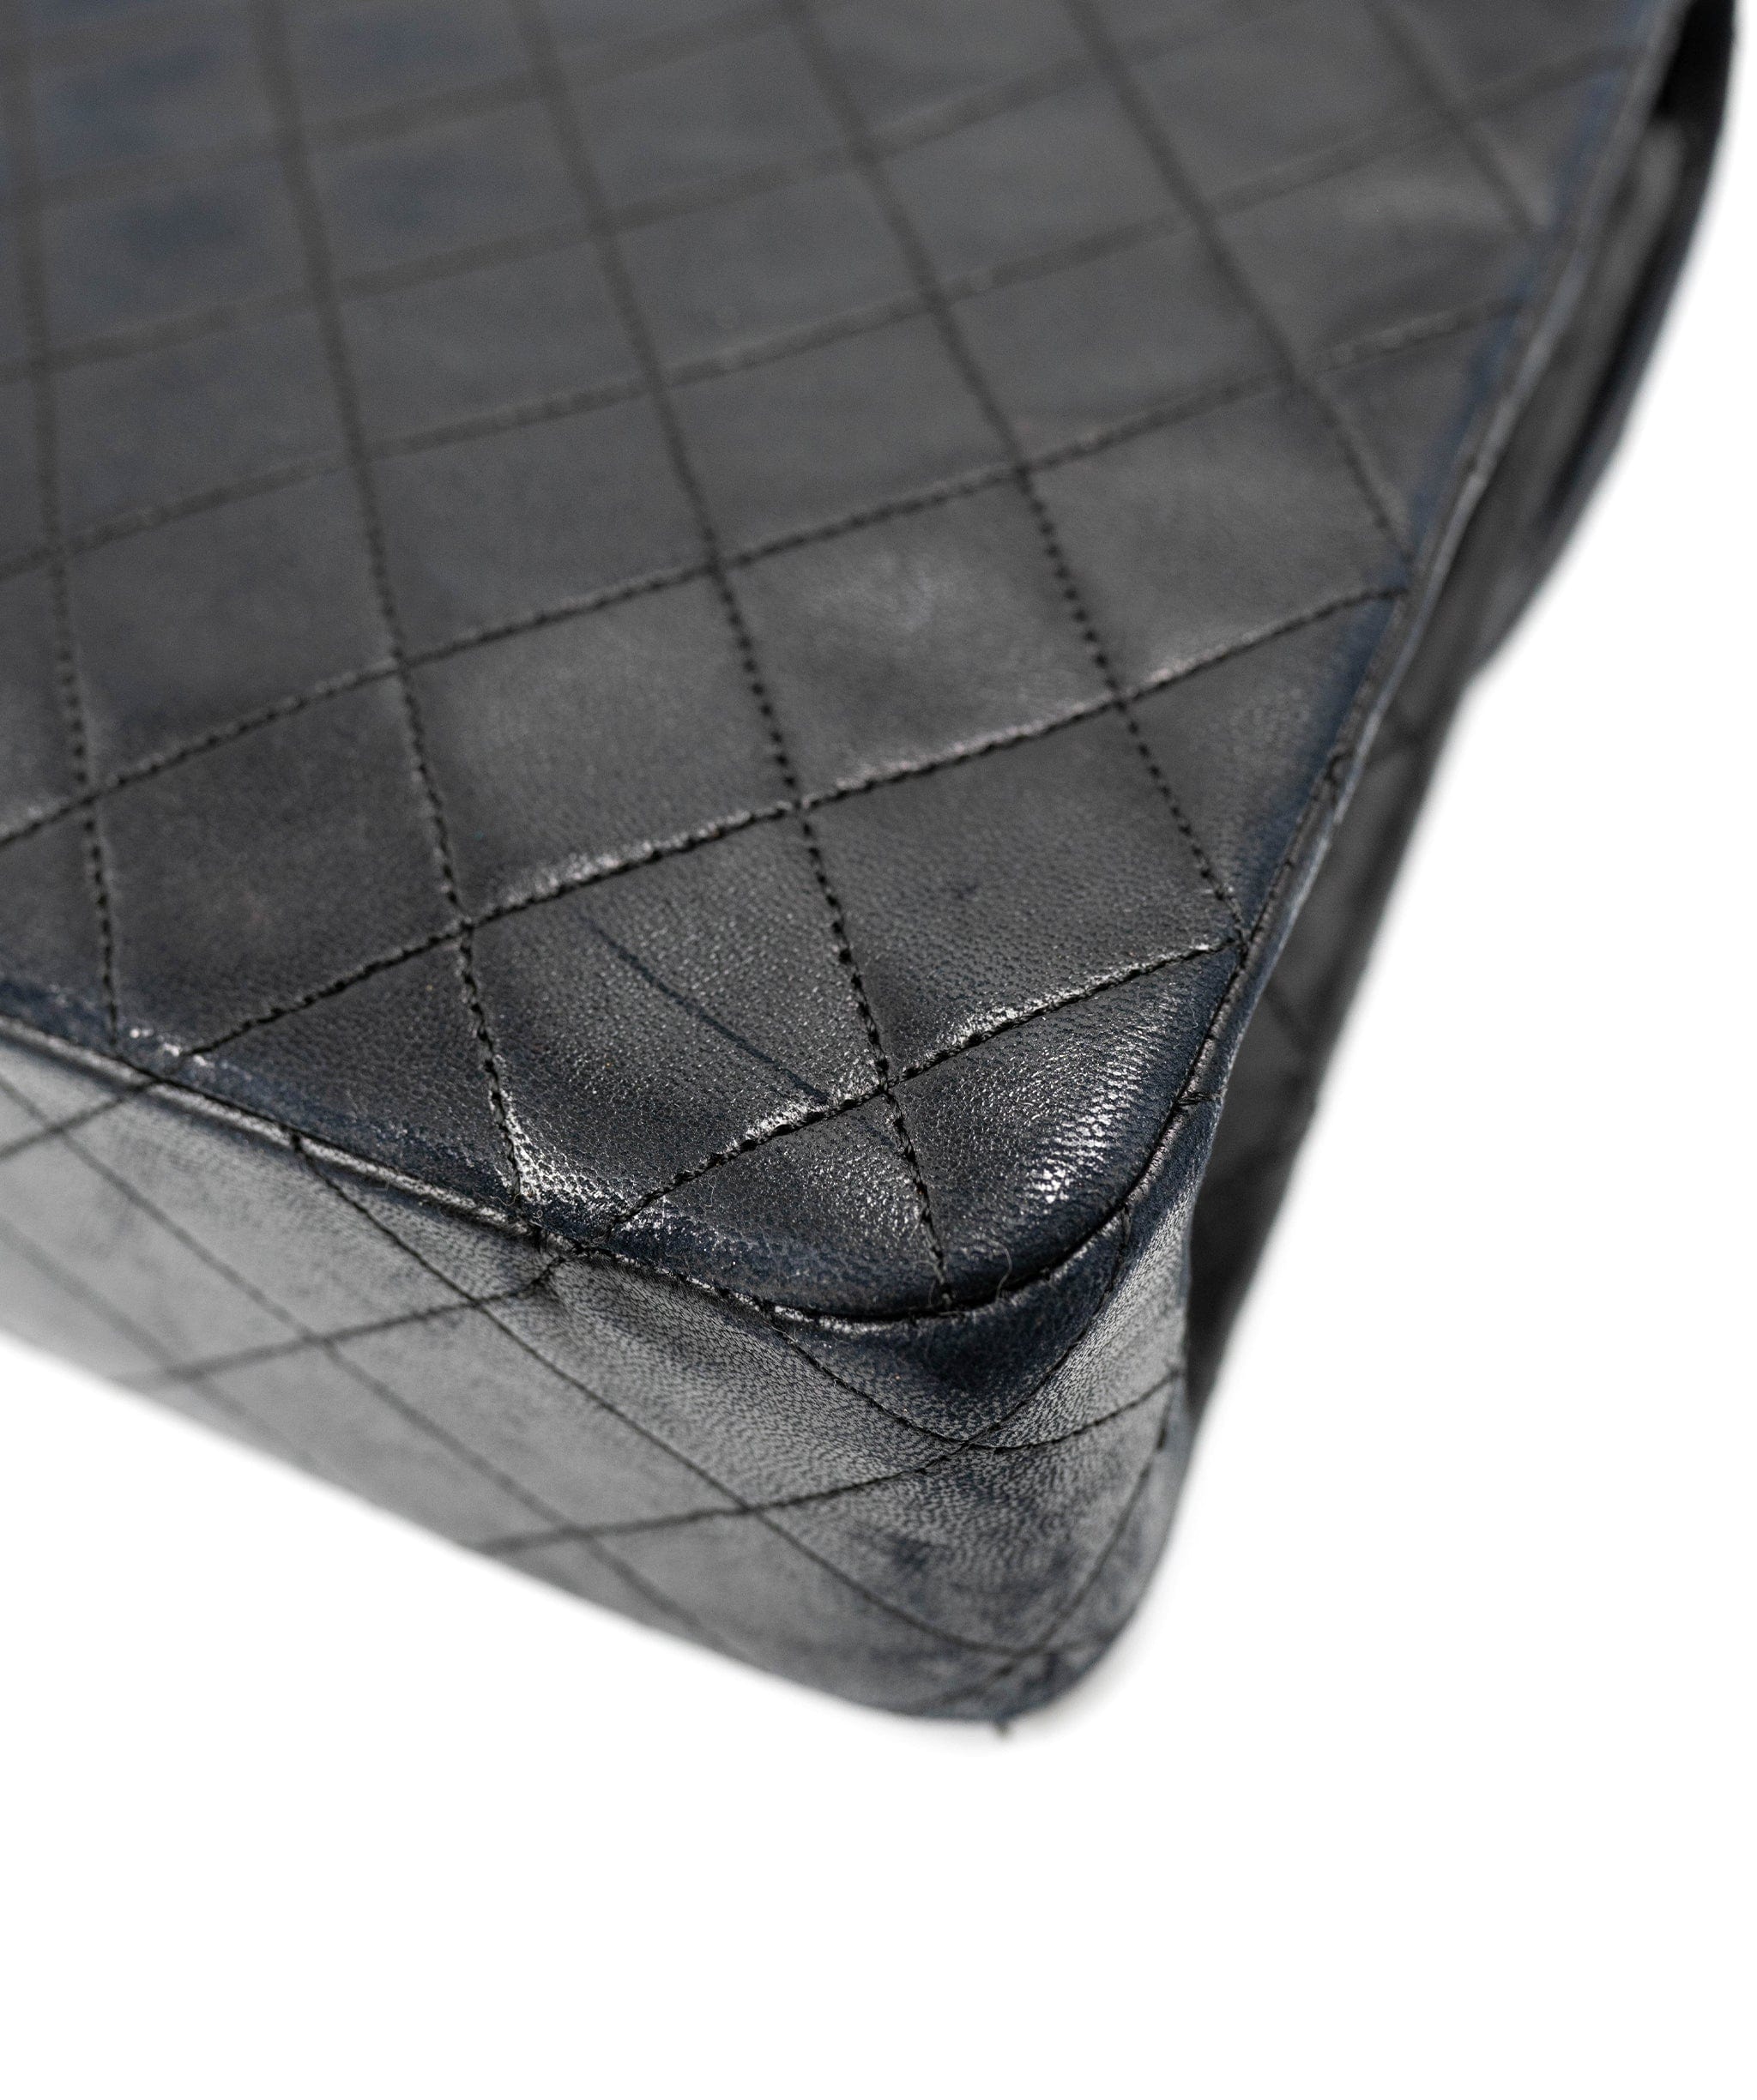 Chanel Chanel half moon bag in black lambskin. AGL2303